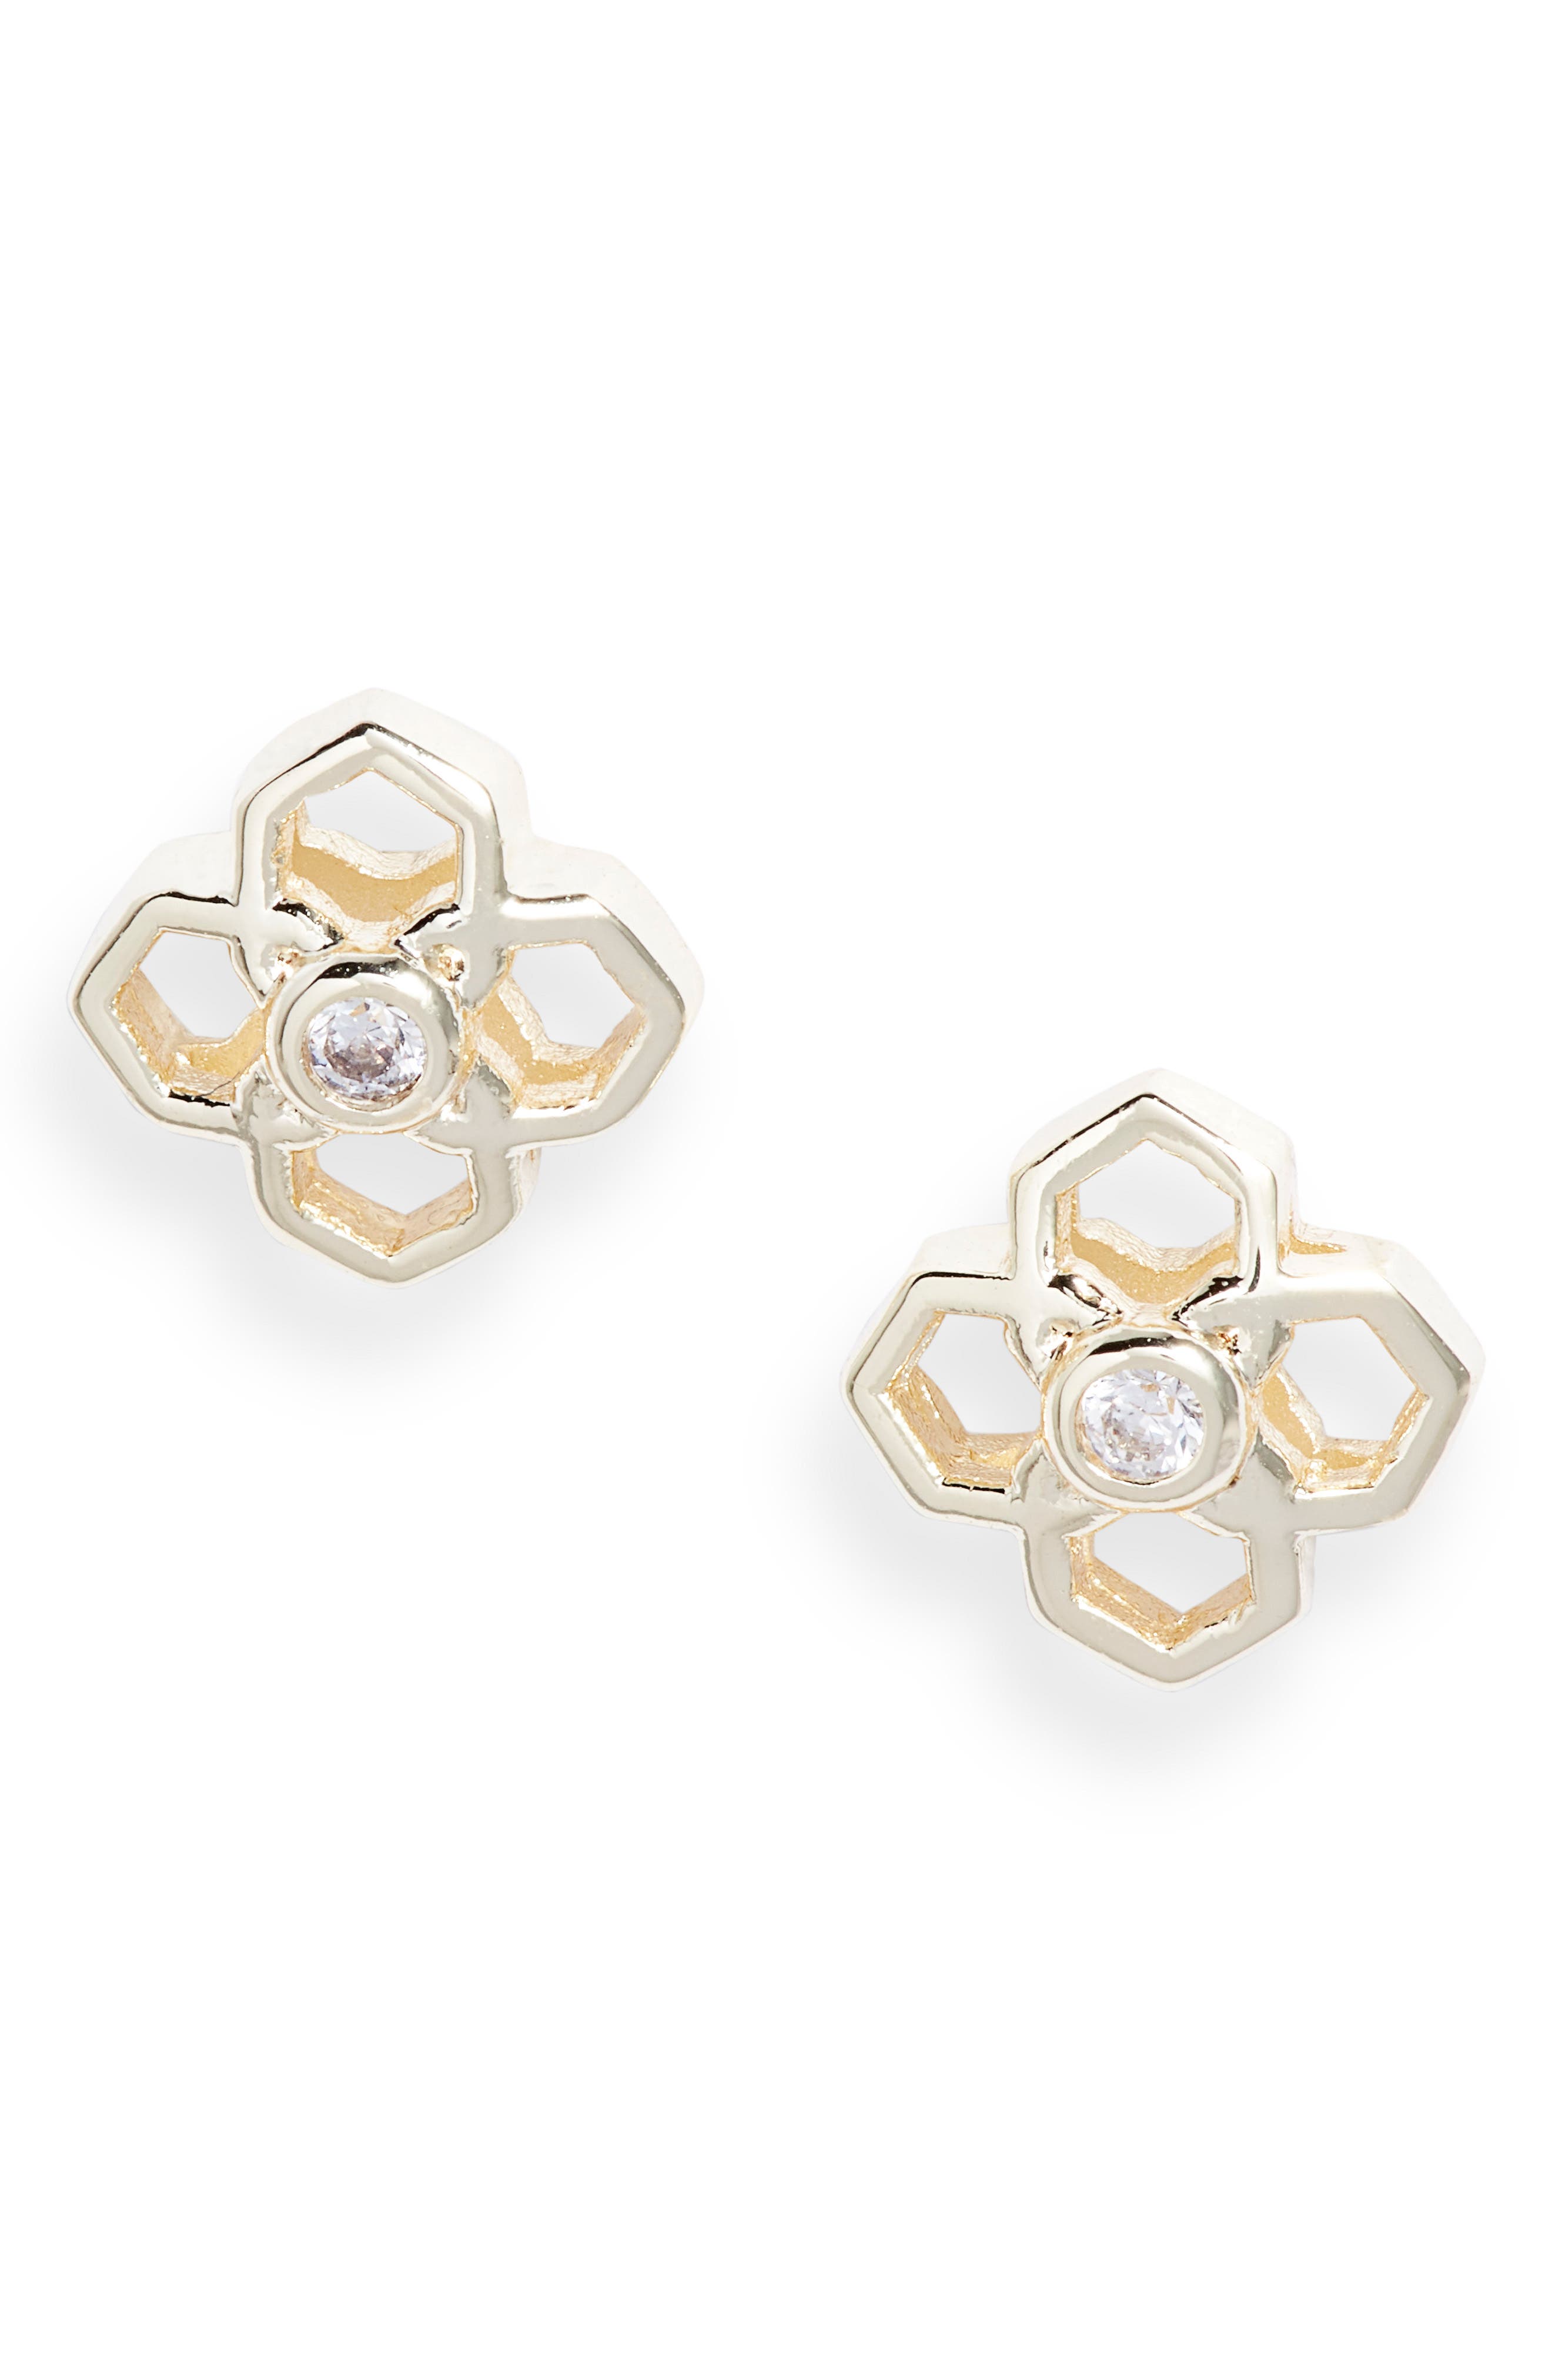 New Fine Real 18K Rose Gold Earrings Woman Lucky O Chain Link Star Flower 105mmL